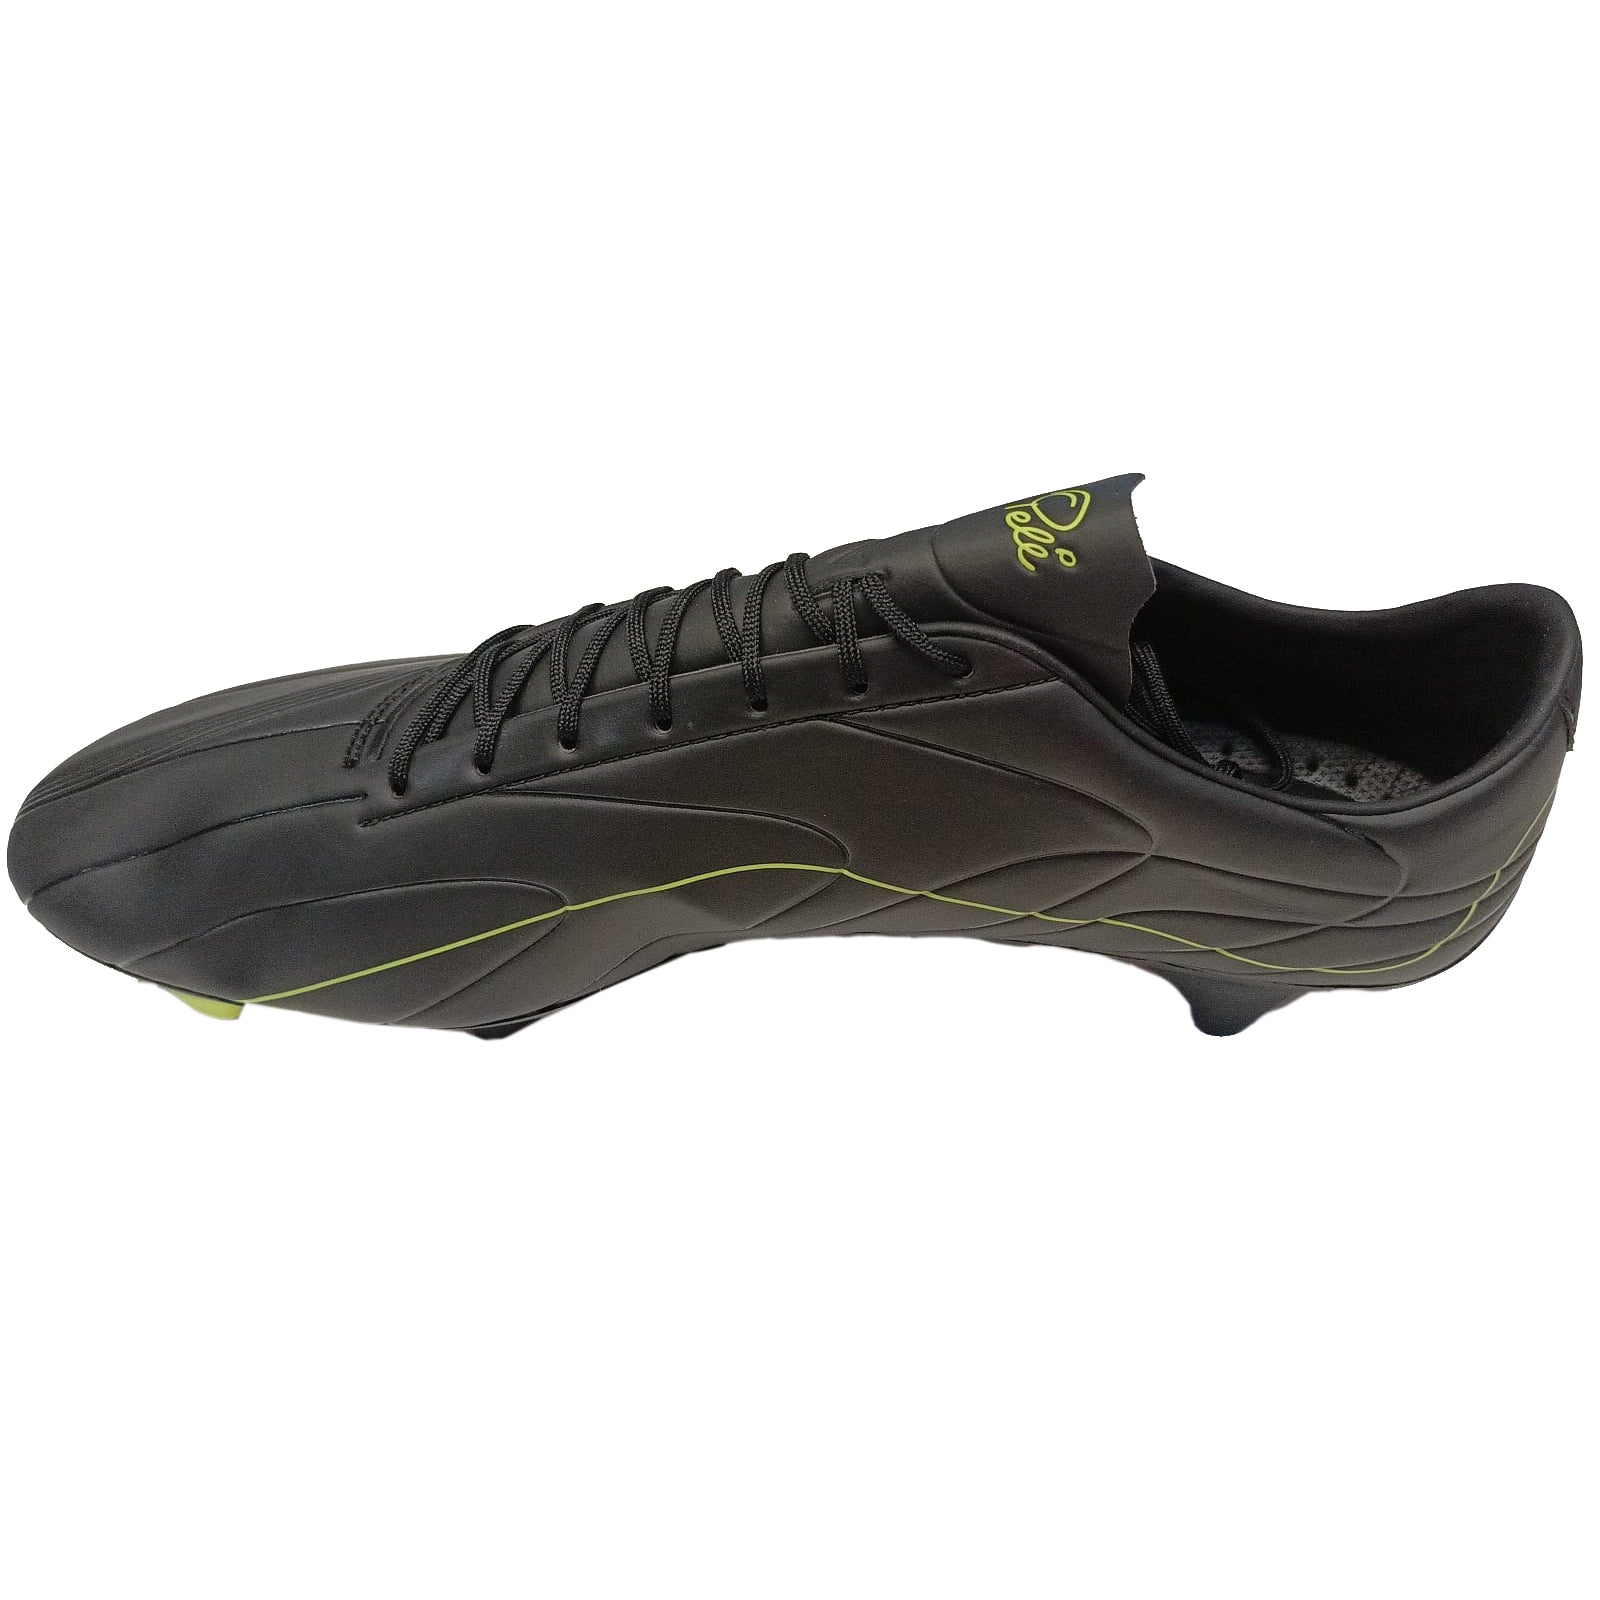 Pele Sports Trinity 3E FG Football Boots - Black/Neon Yellow